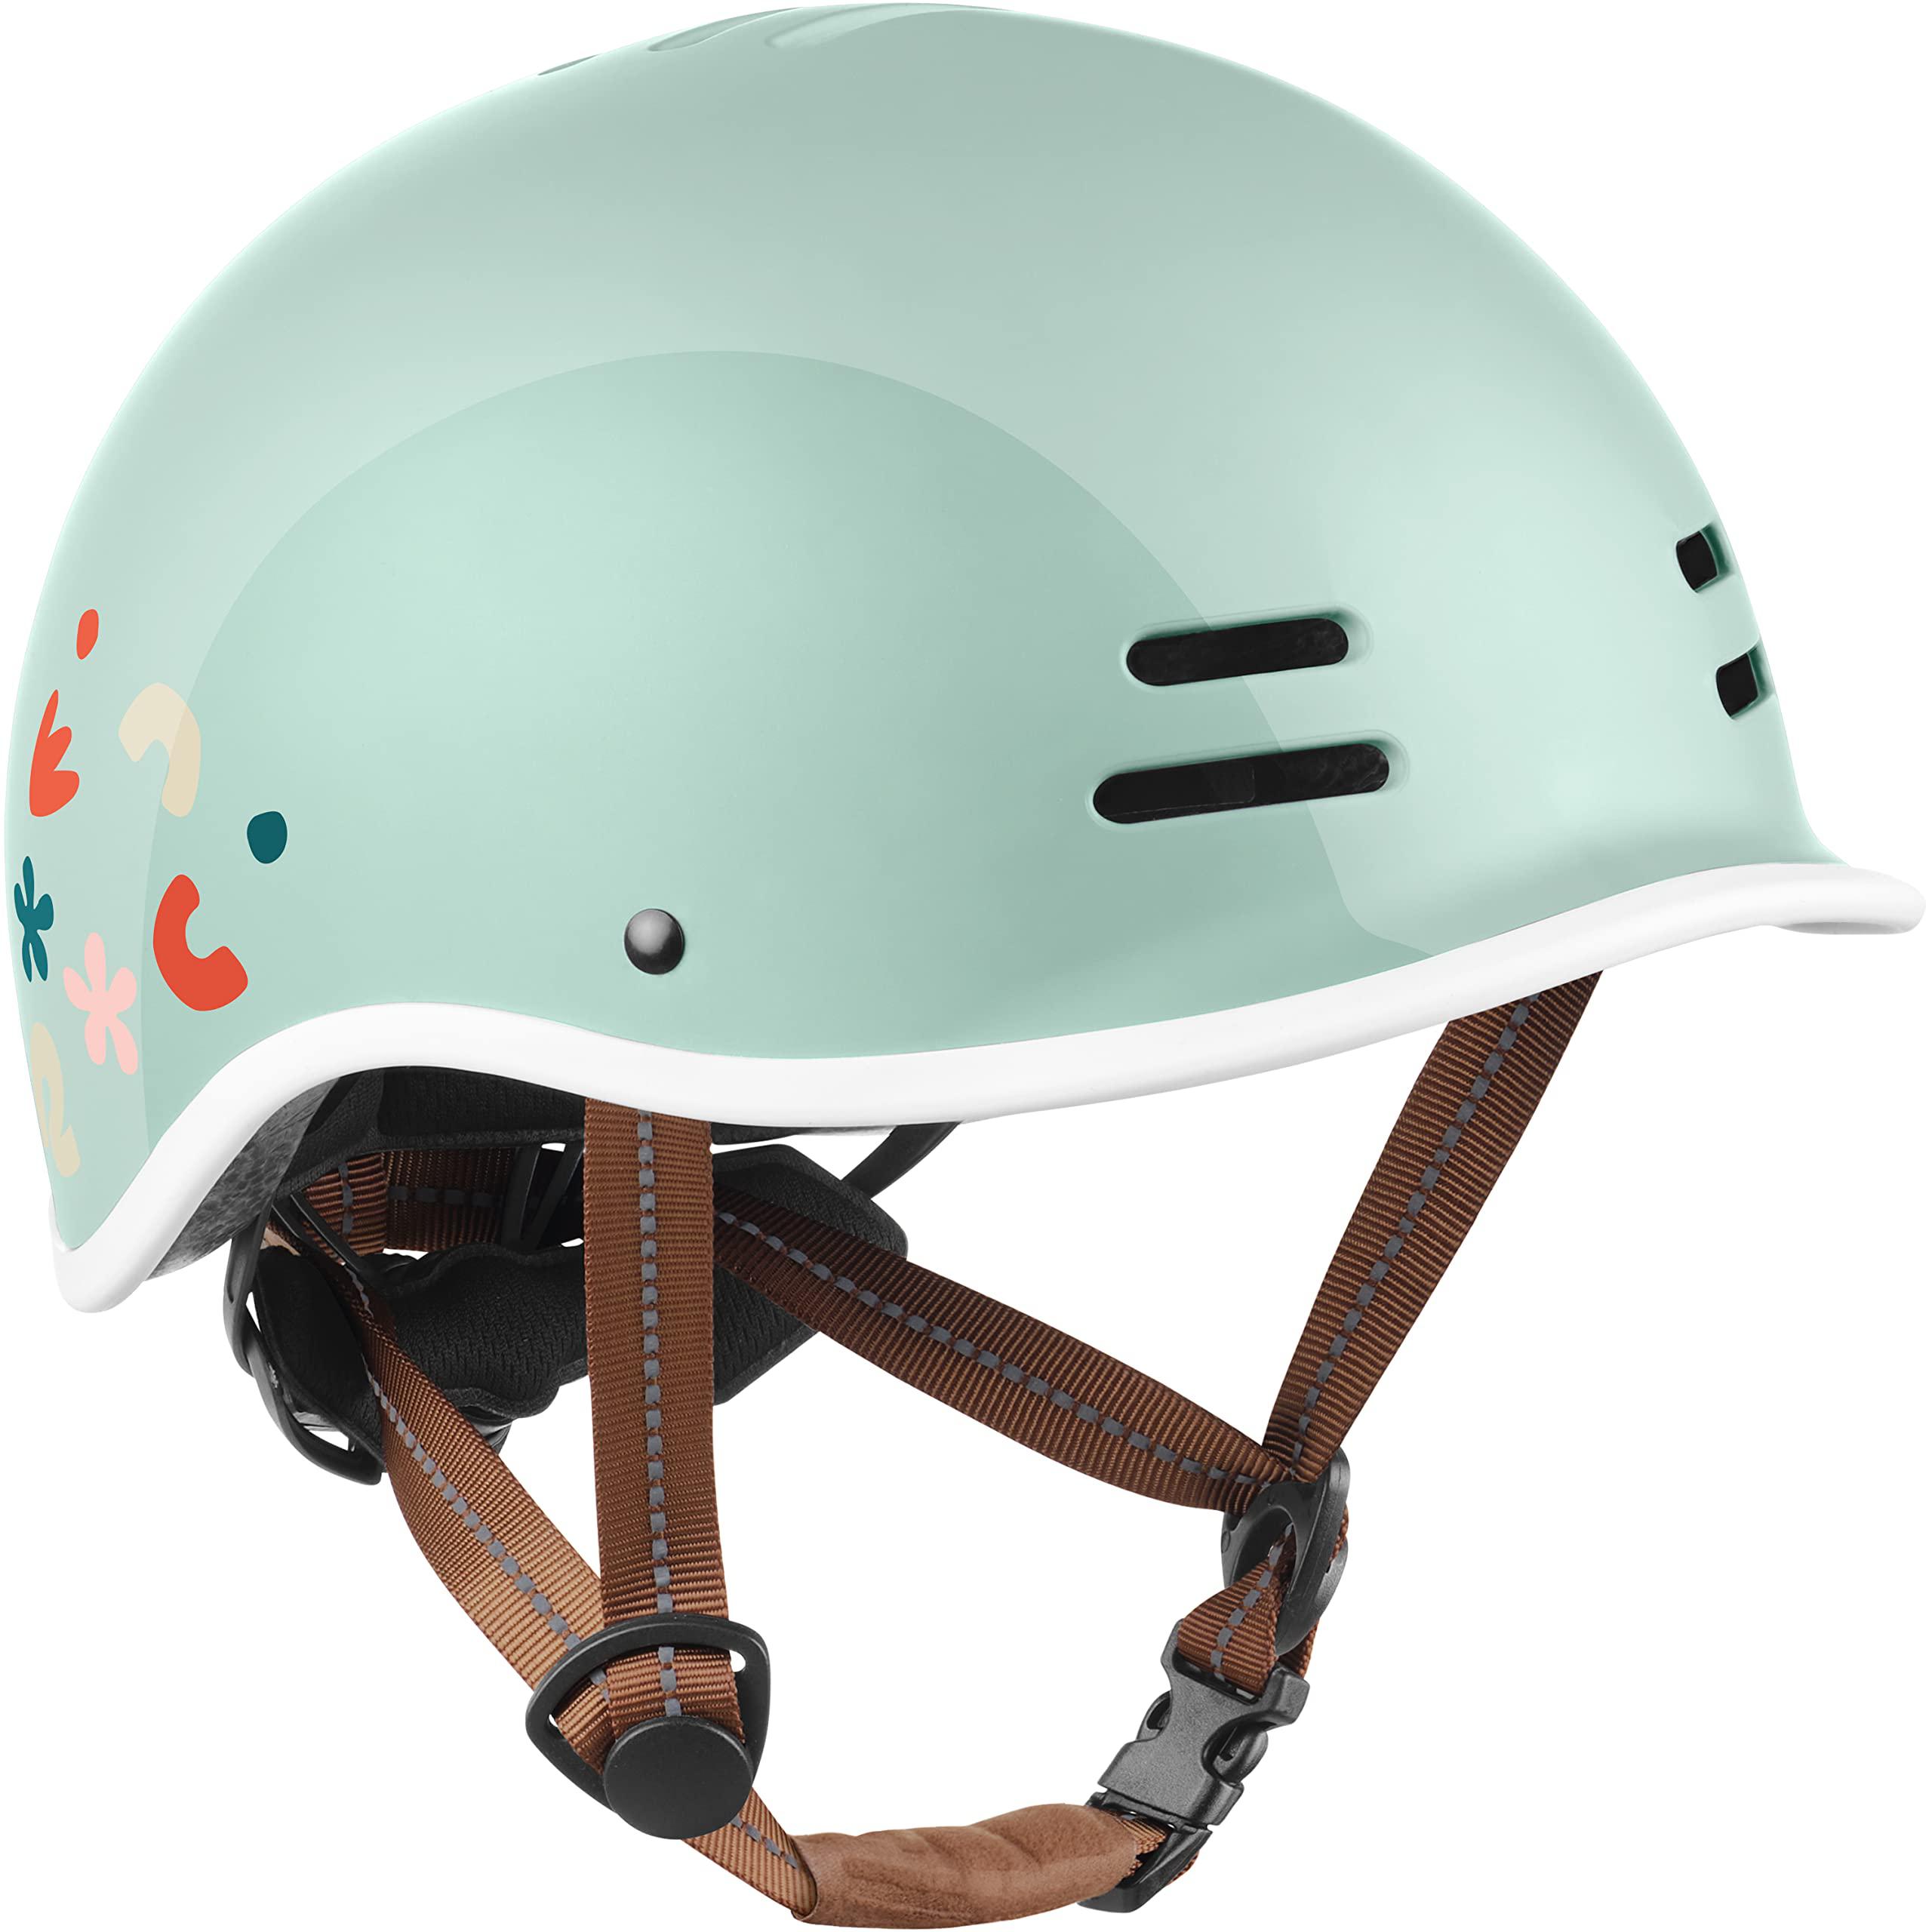 retrospec remi kids' bike helmet for youth boys & girls- bicycle helmet with built-in visor and adjustable reflective straps 